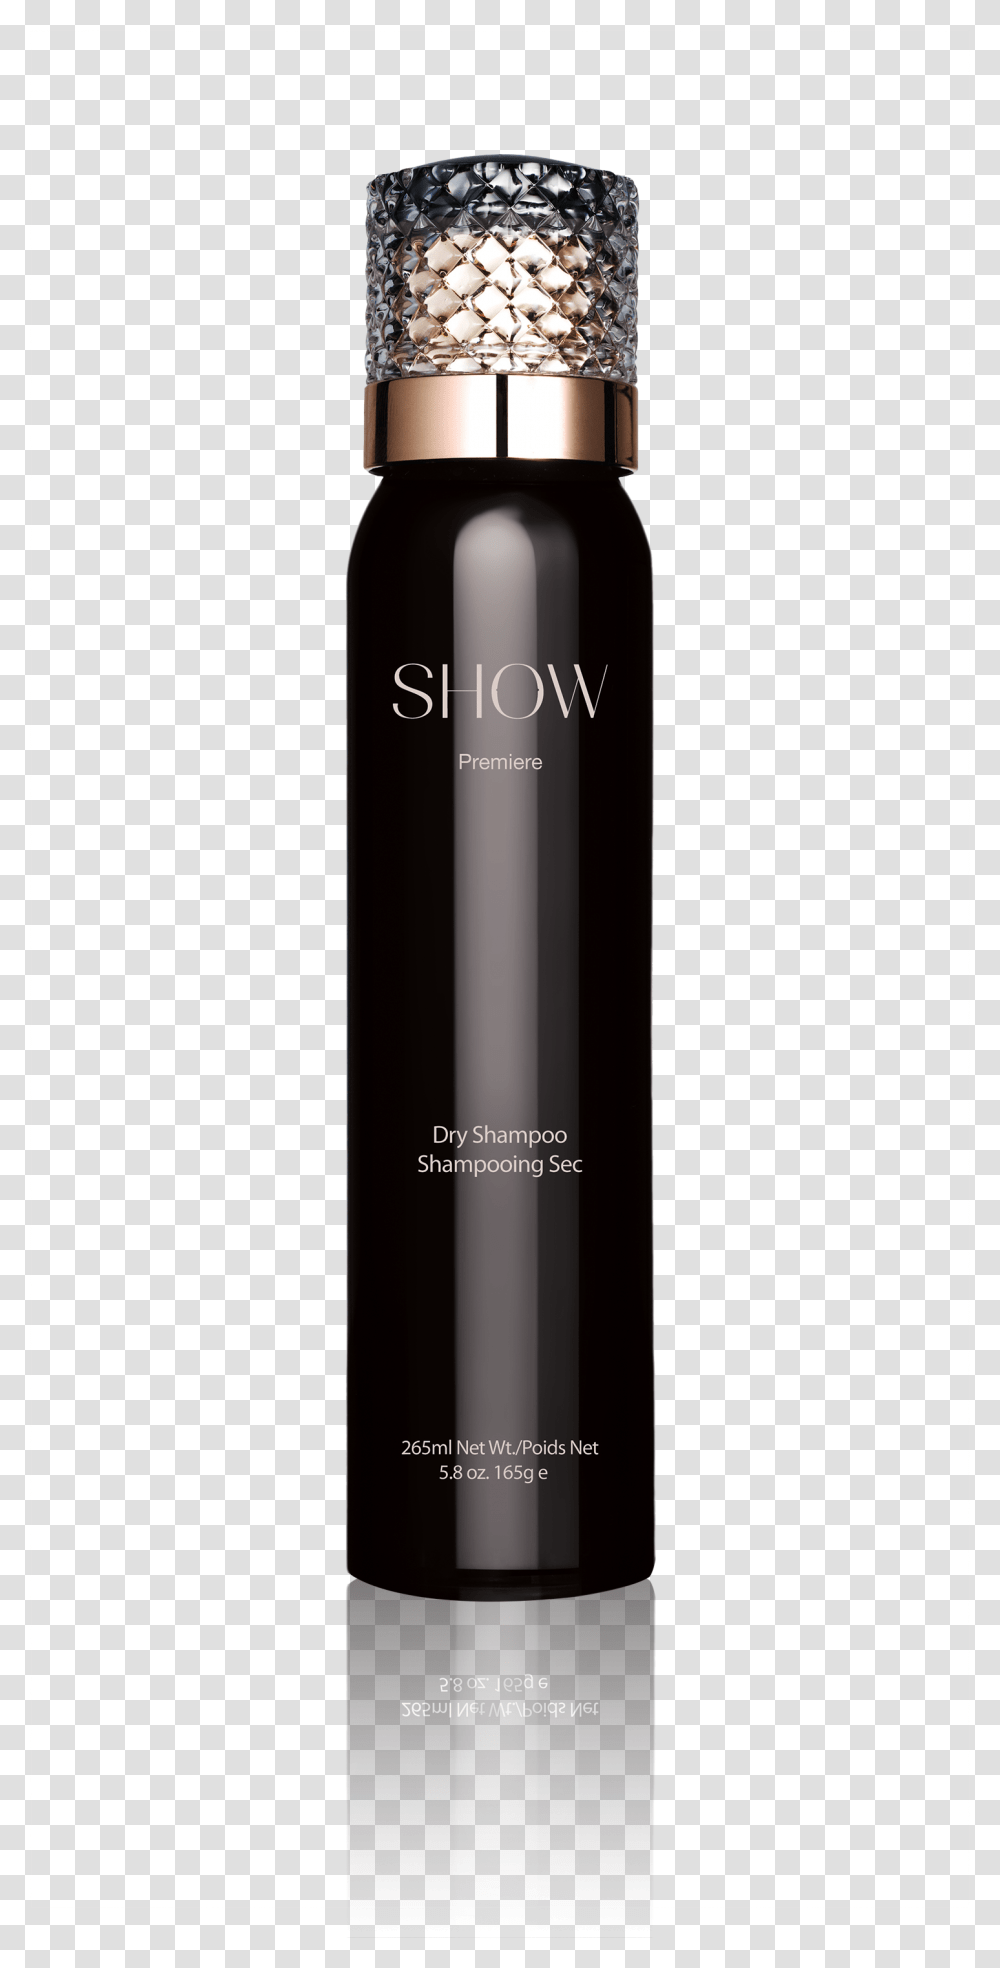 Hjem Show Beauty Styling Premiere Dry Shampoo Luxury Shampoo Bottles, Wine, Alcohol, Beverage, Drink Transparent Png